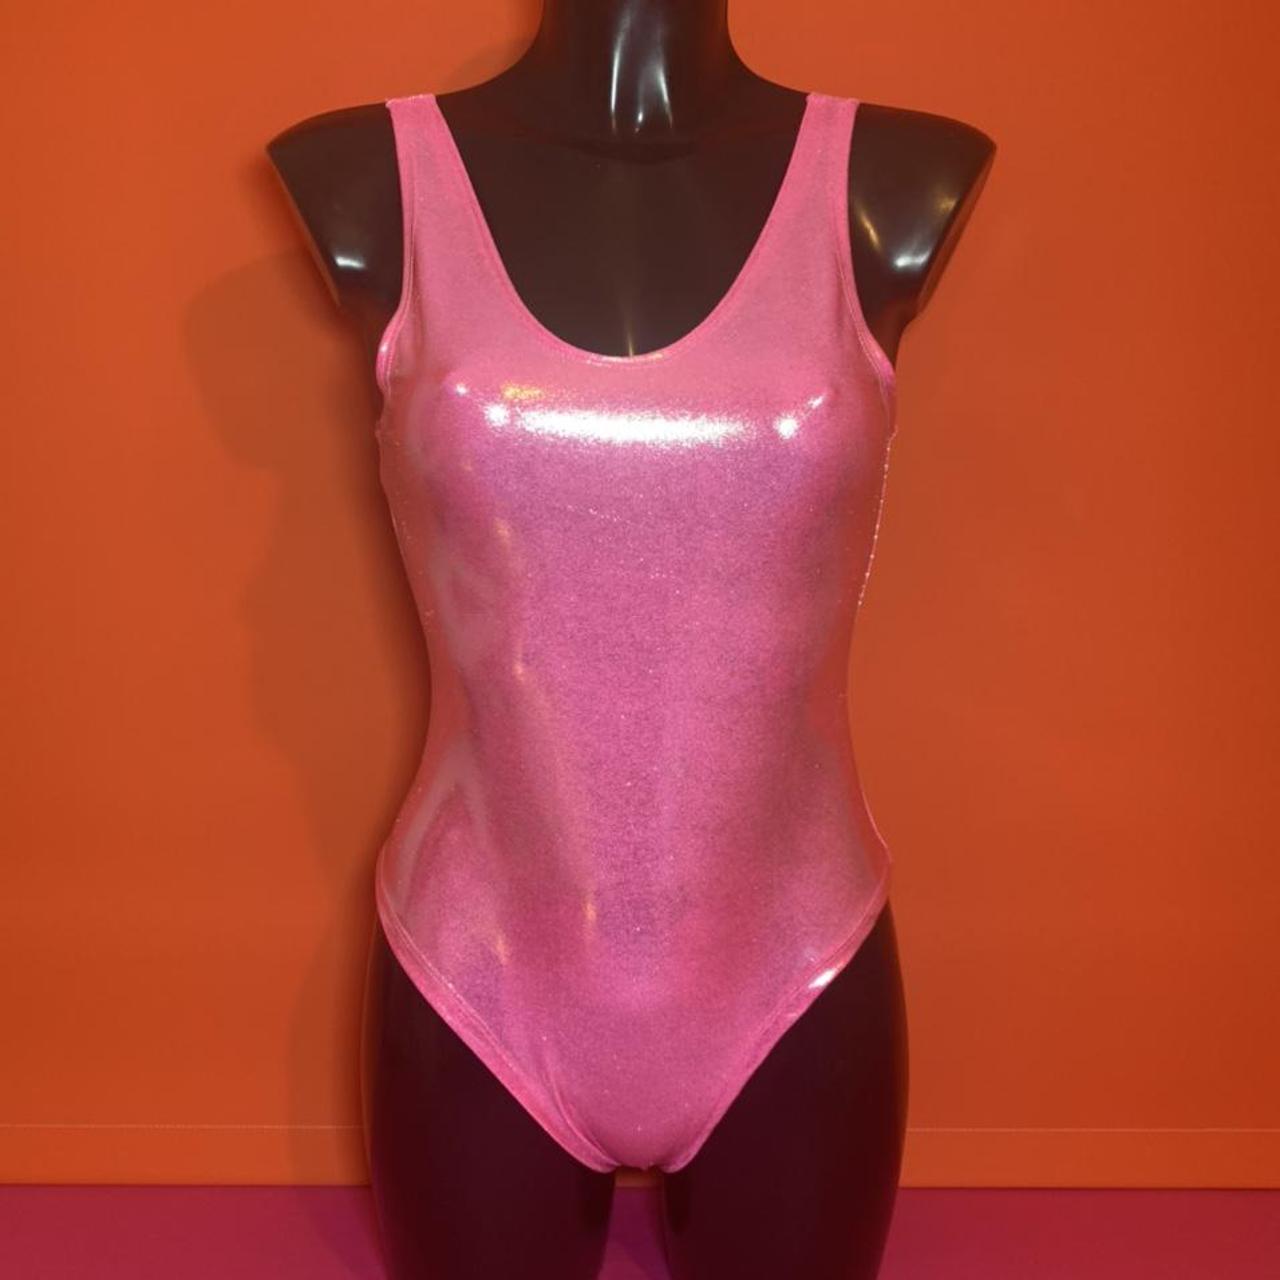 Barbie Spandex Bodysuits for Women